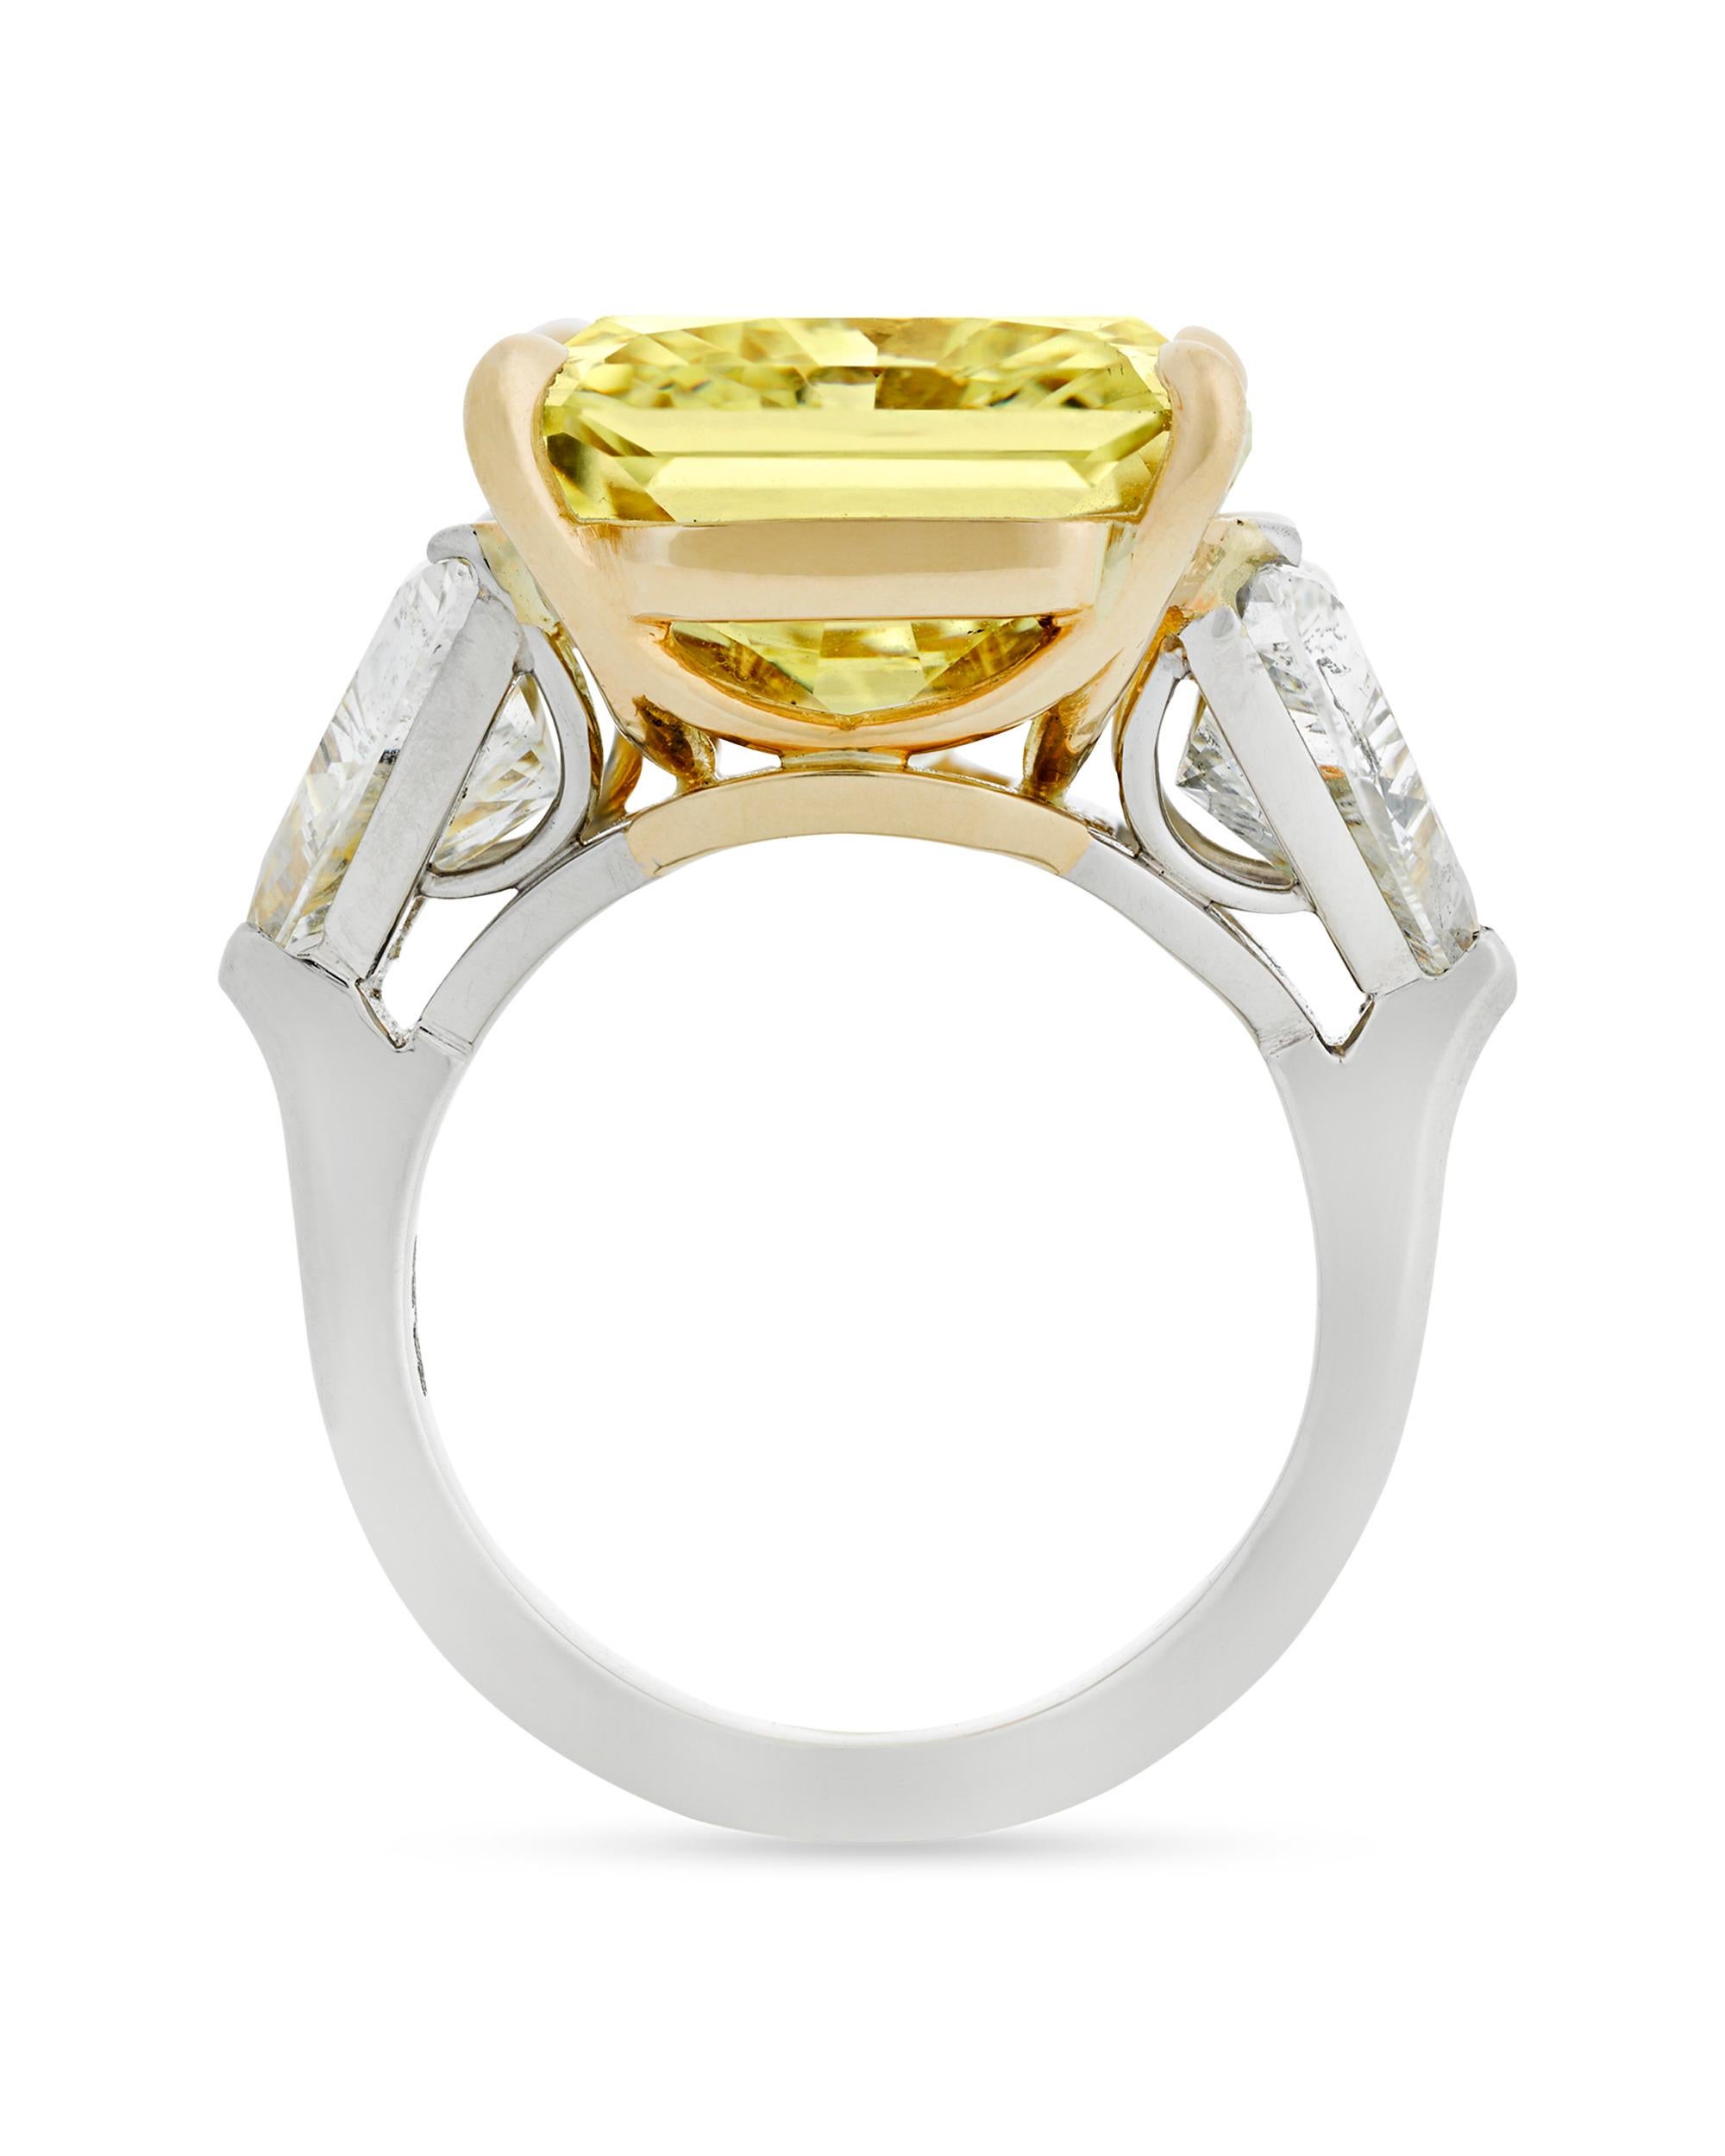 20 carat yellow diamond